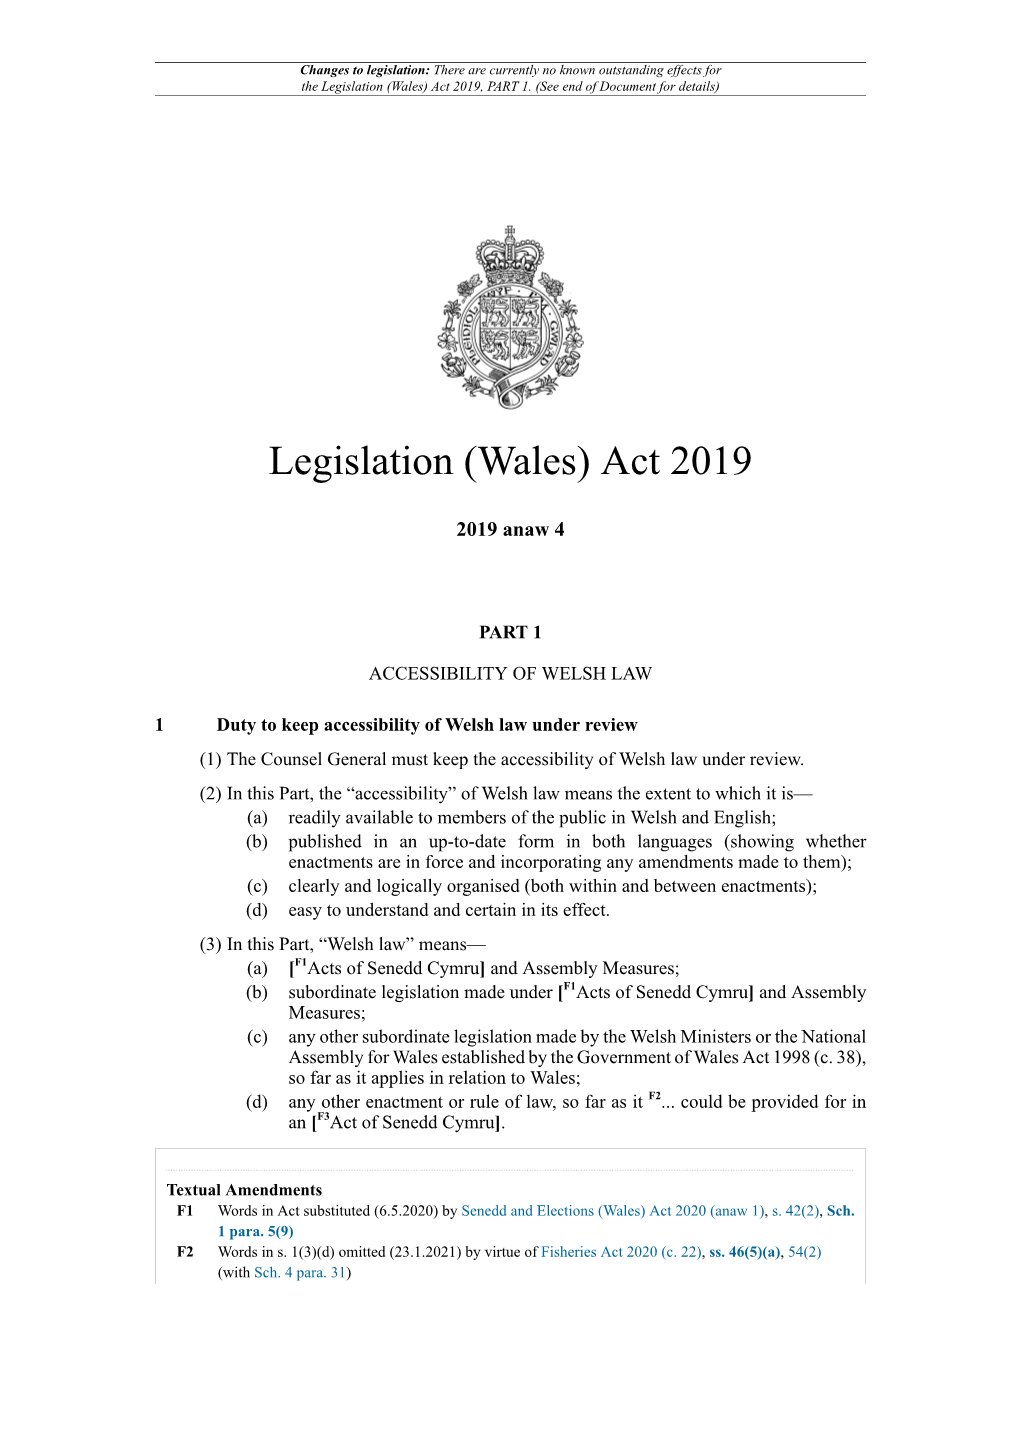 Legislation (Wales) Act 2019, PART 1